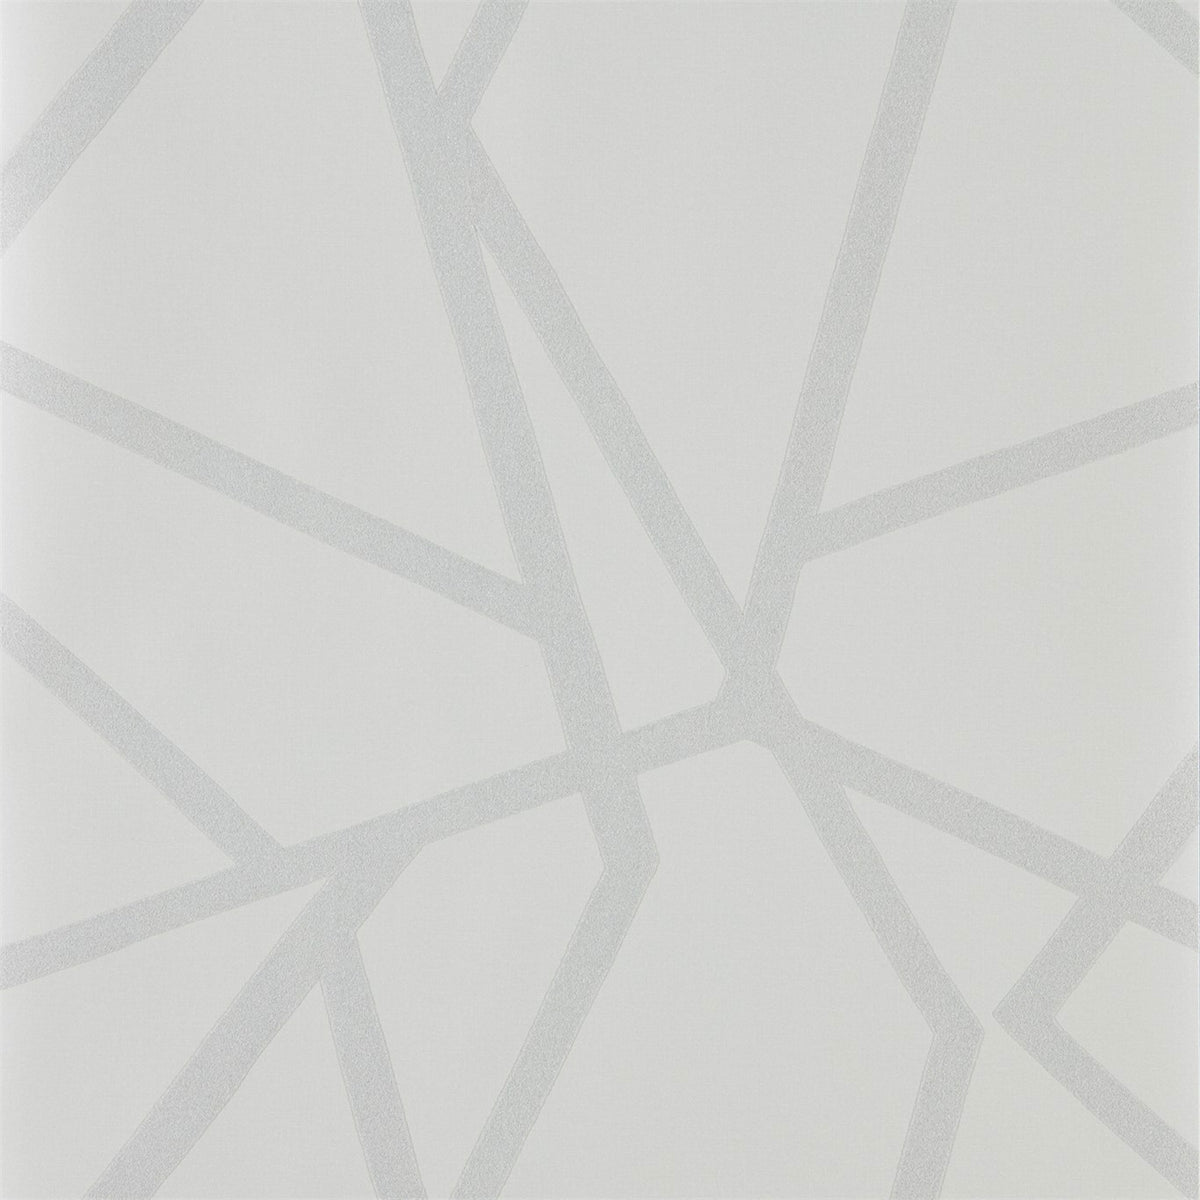 Sumi Shimmer - Porcelain/Linen